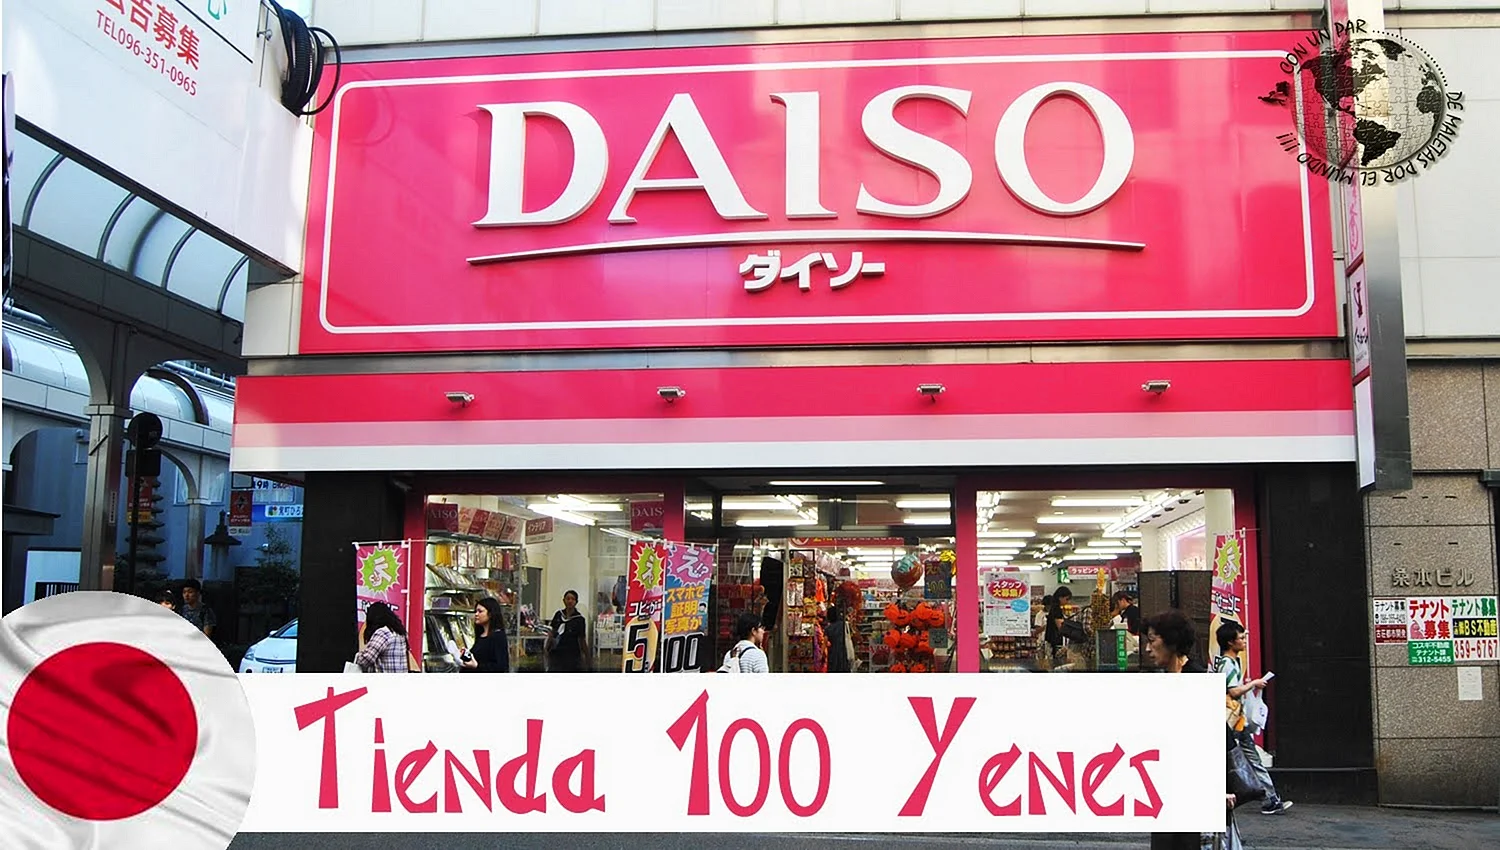 Daiso Japan Sign Wallpaper